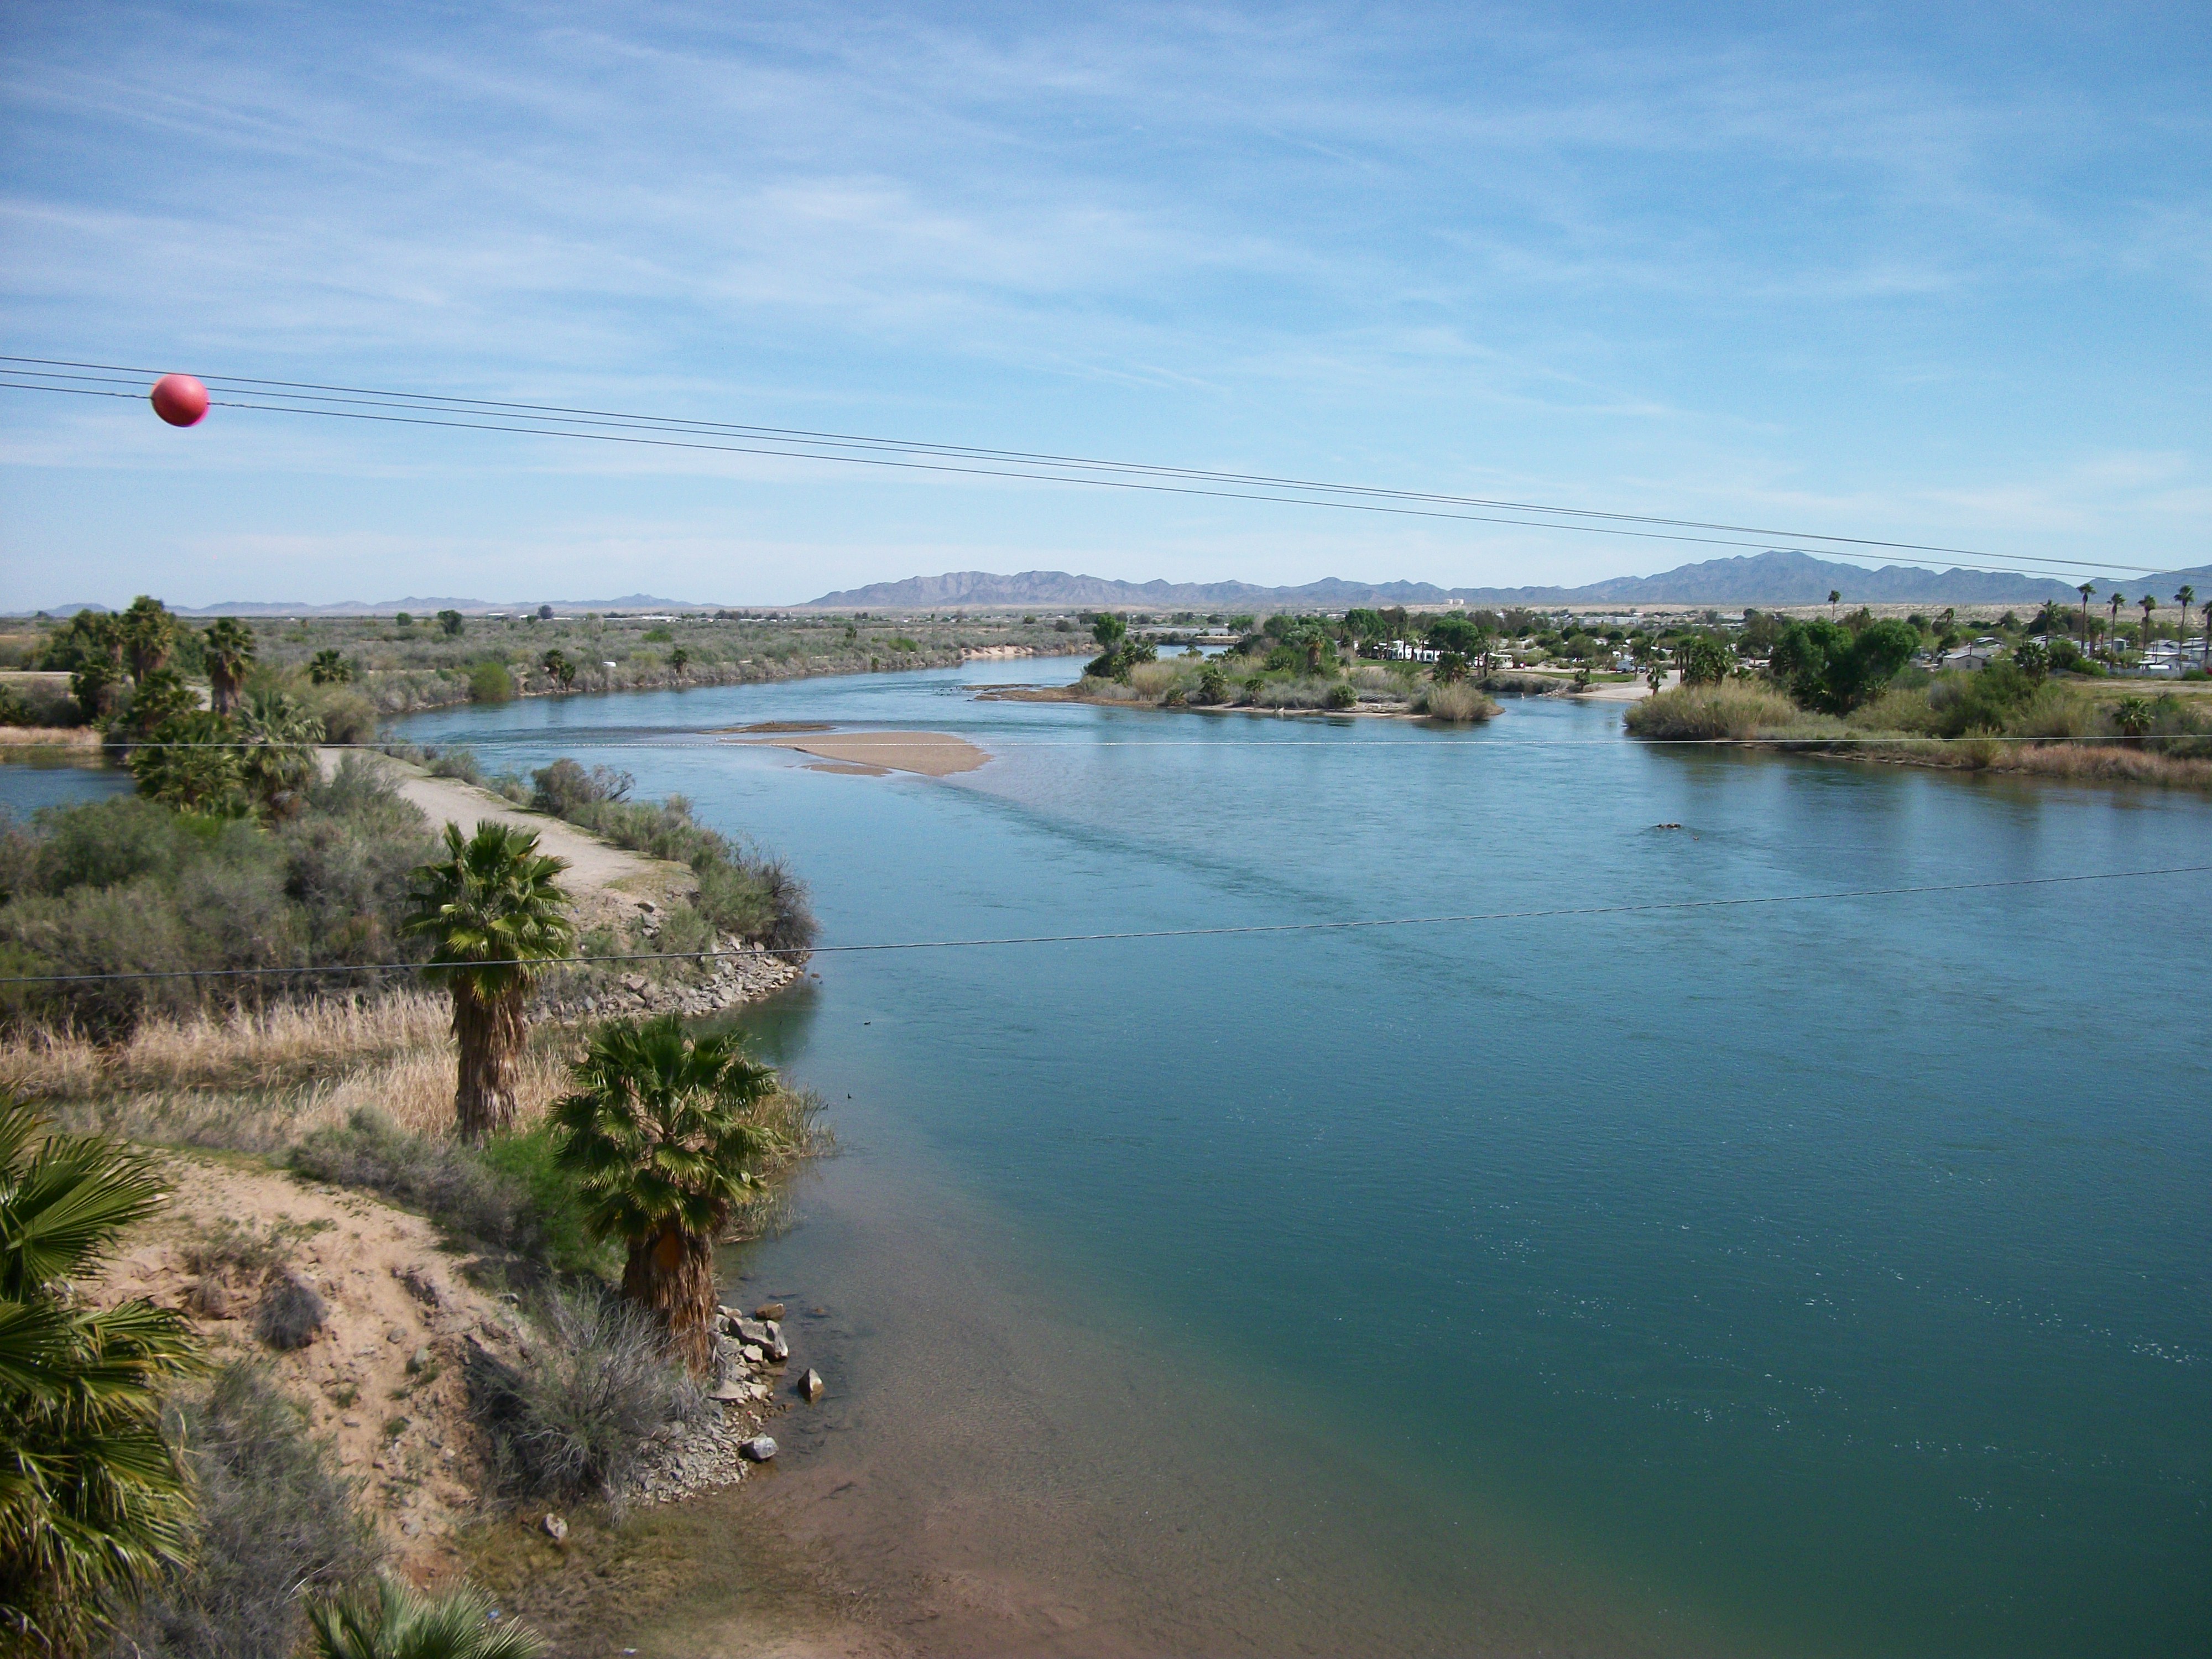 Colorado River that separates California and Arizona